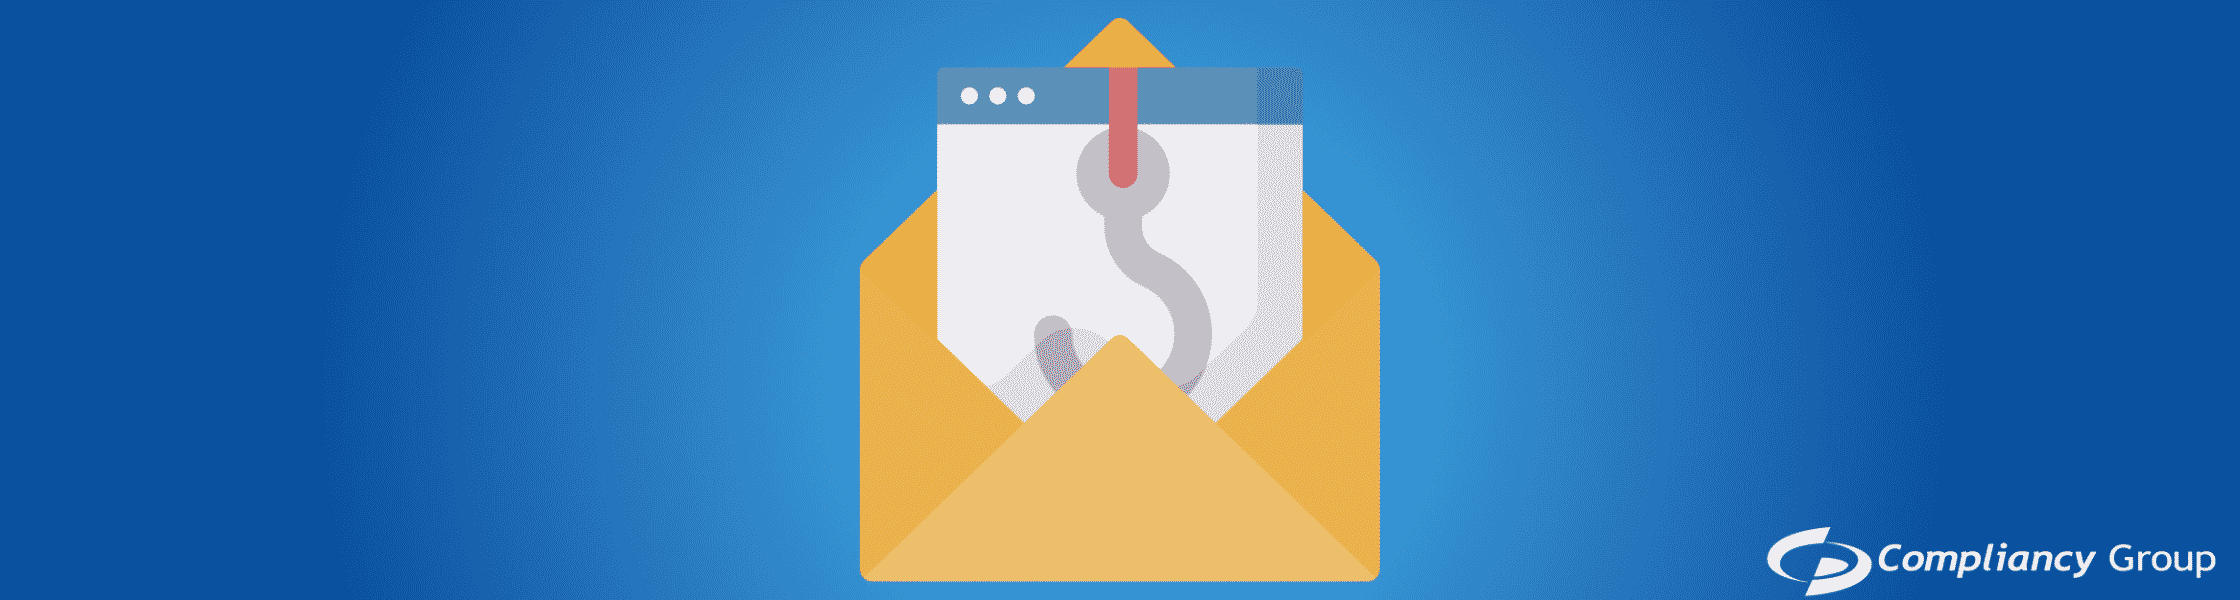 Ways to Detect Phishing Emails